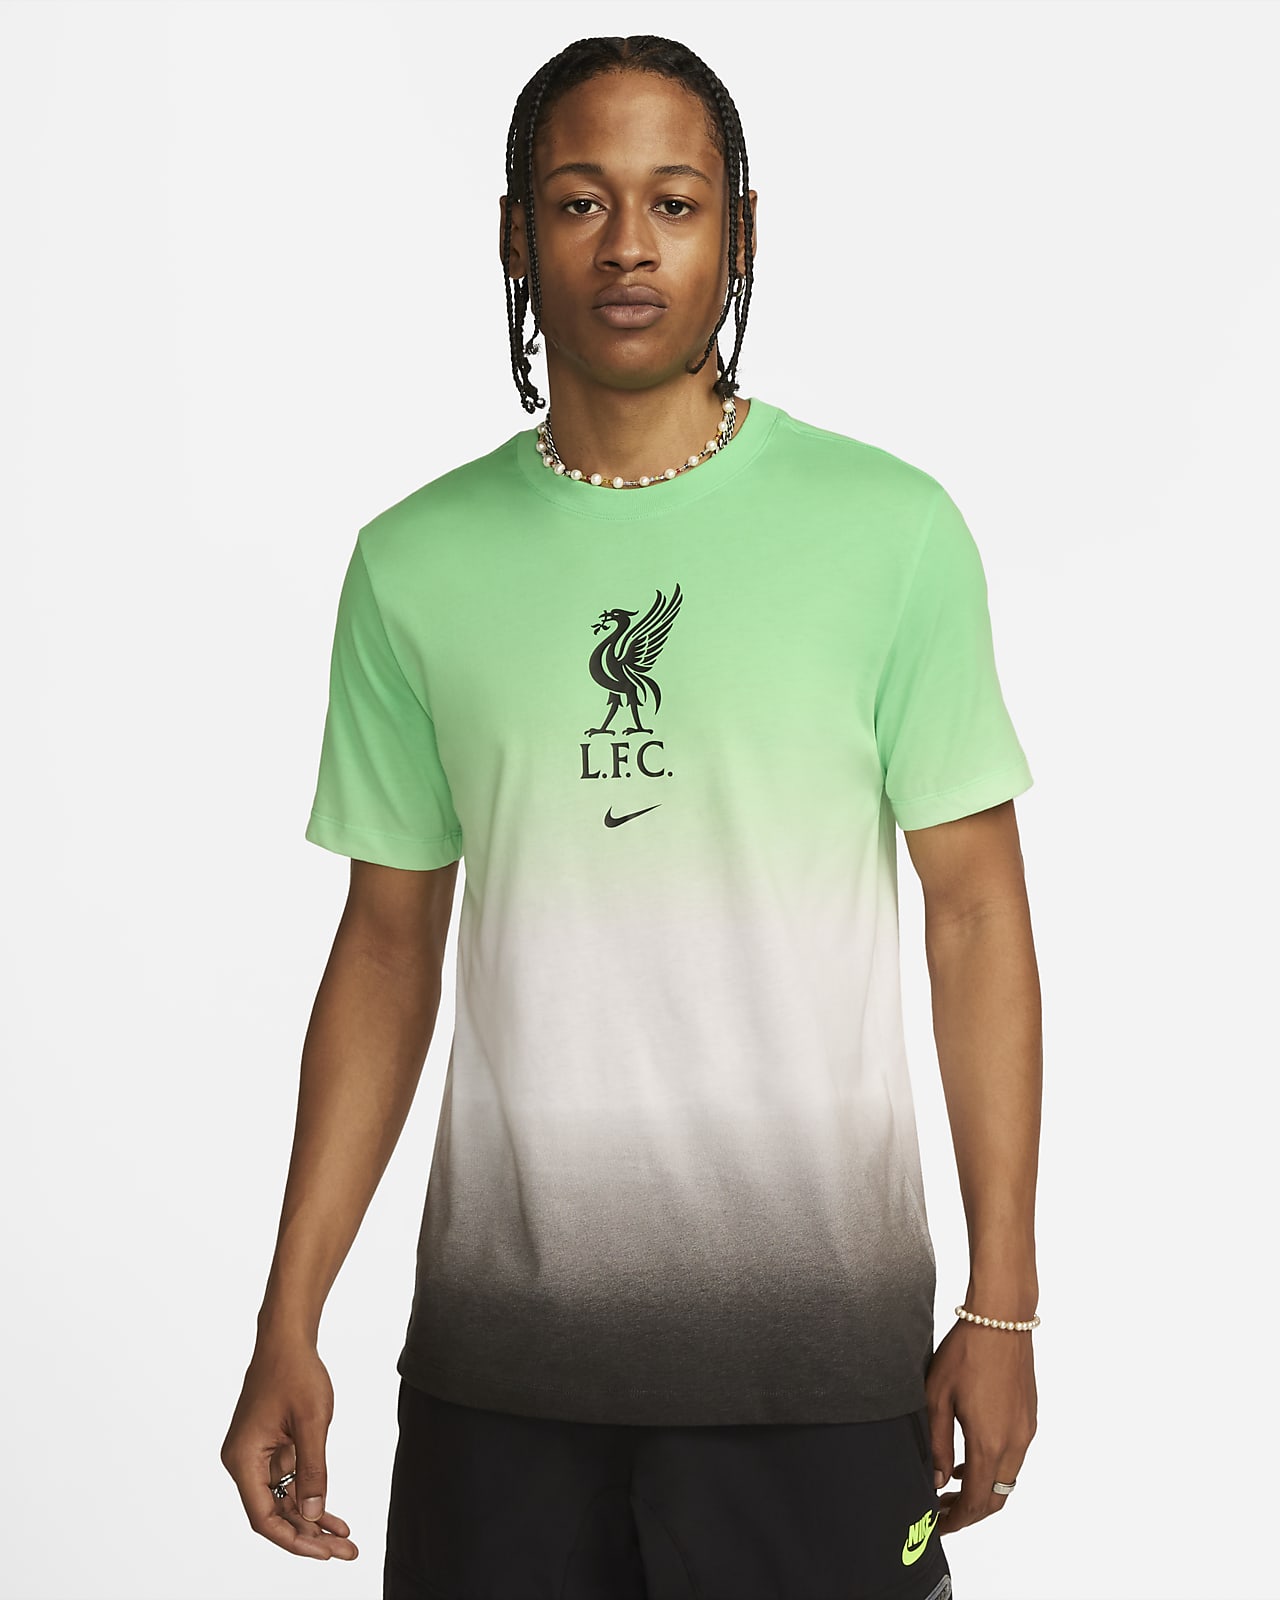 lfc shirts for sale